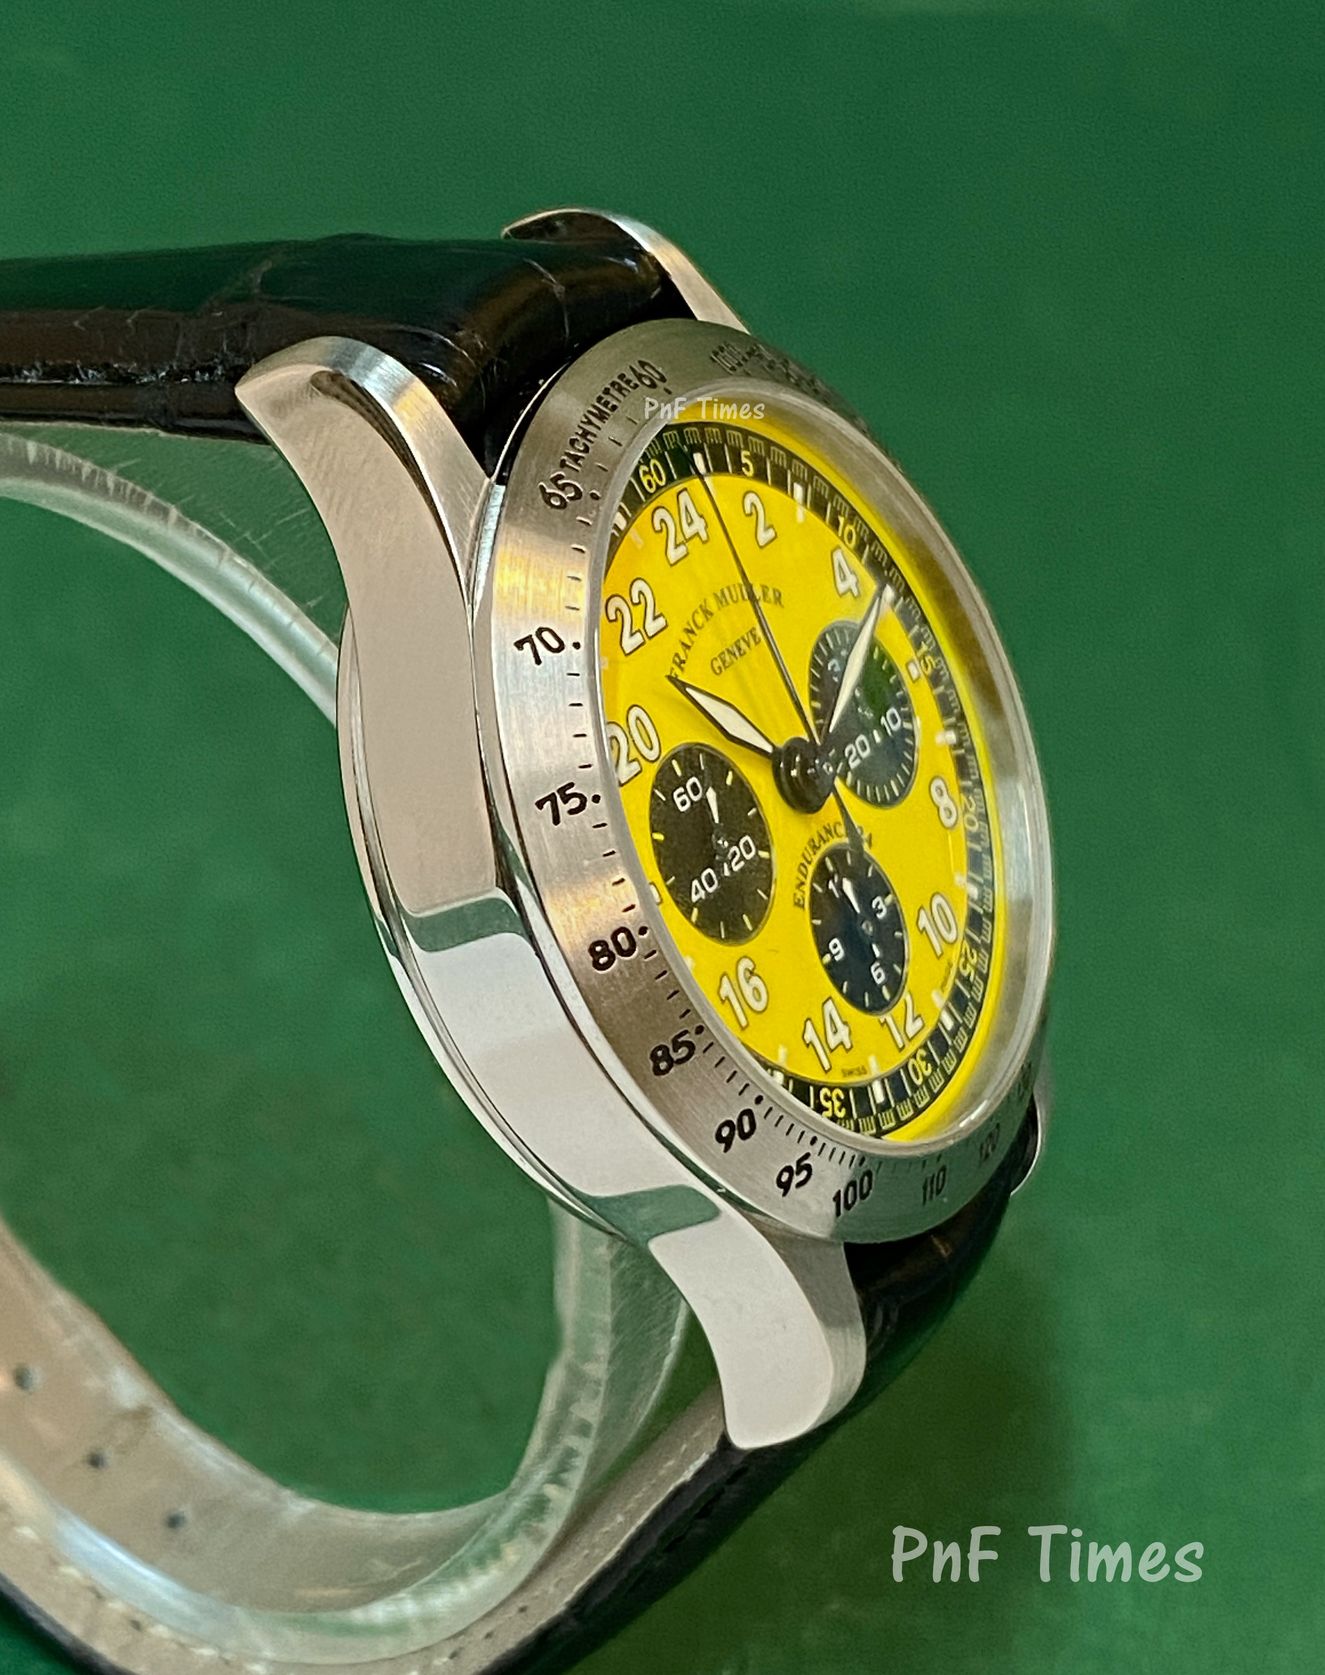 Franck Muller Round Chronograph 18K Yellow Gold & Diamond 34mm Watch 2865 NAD